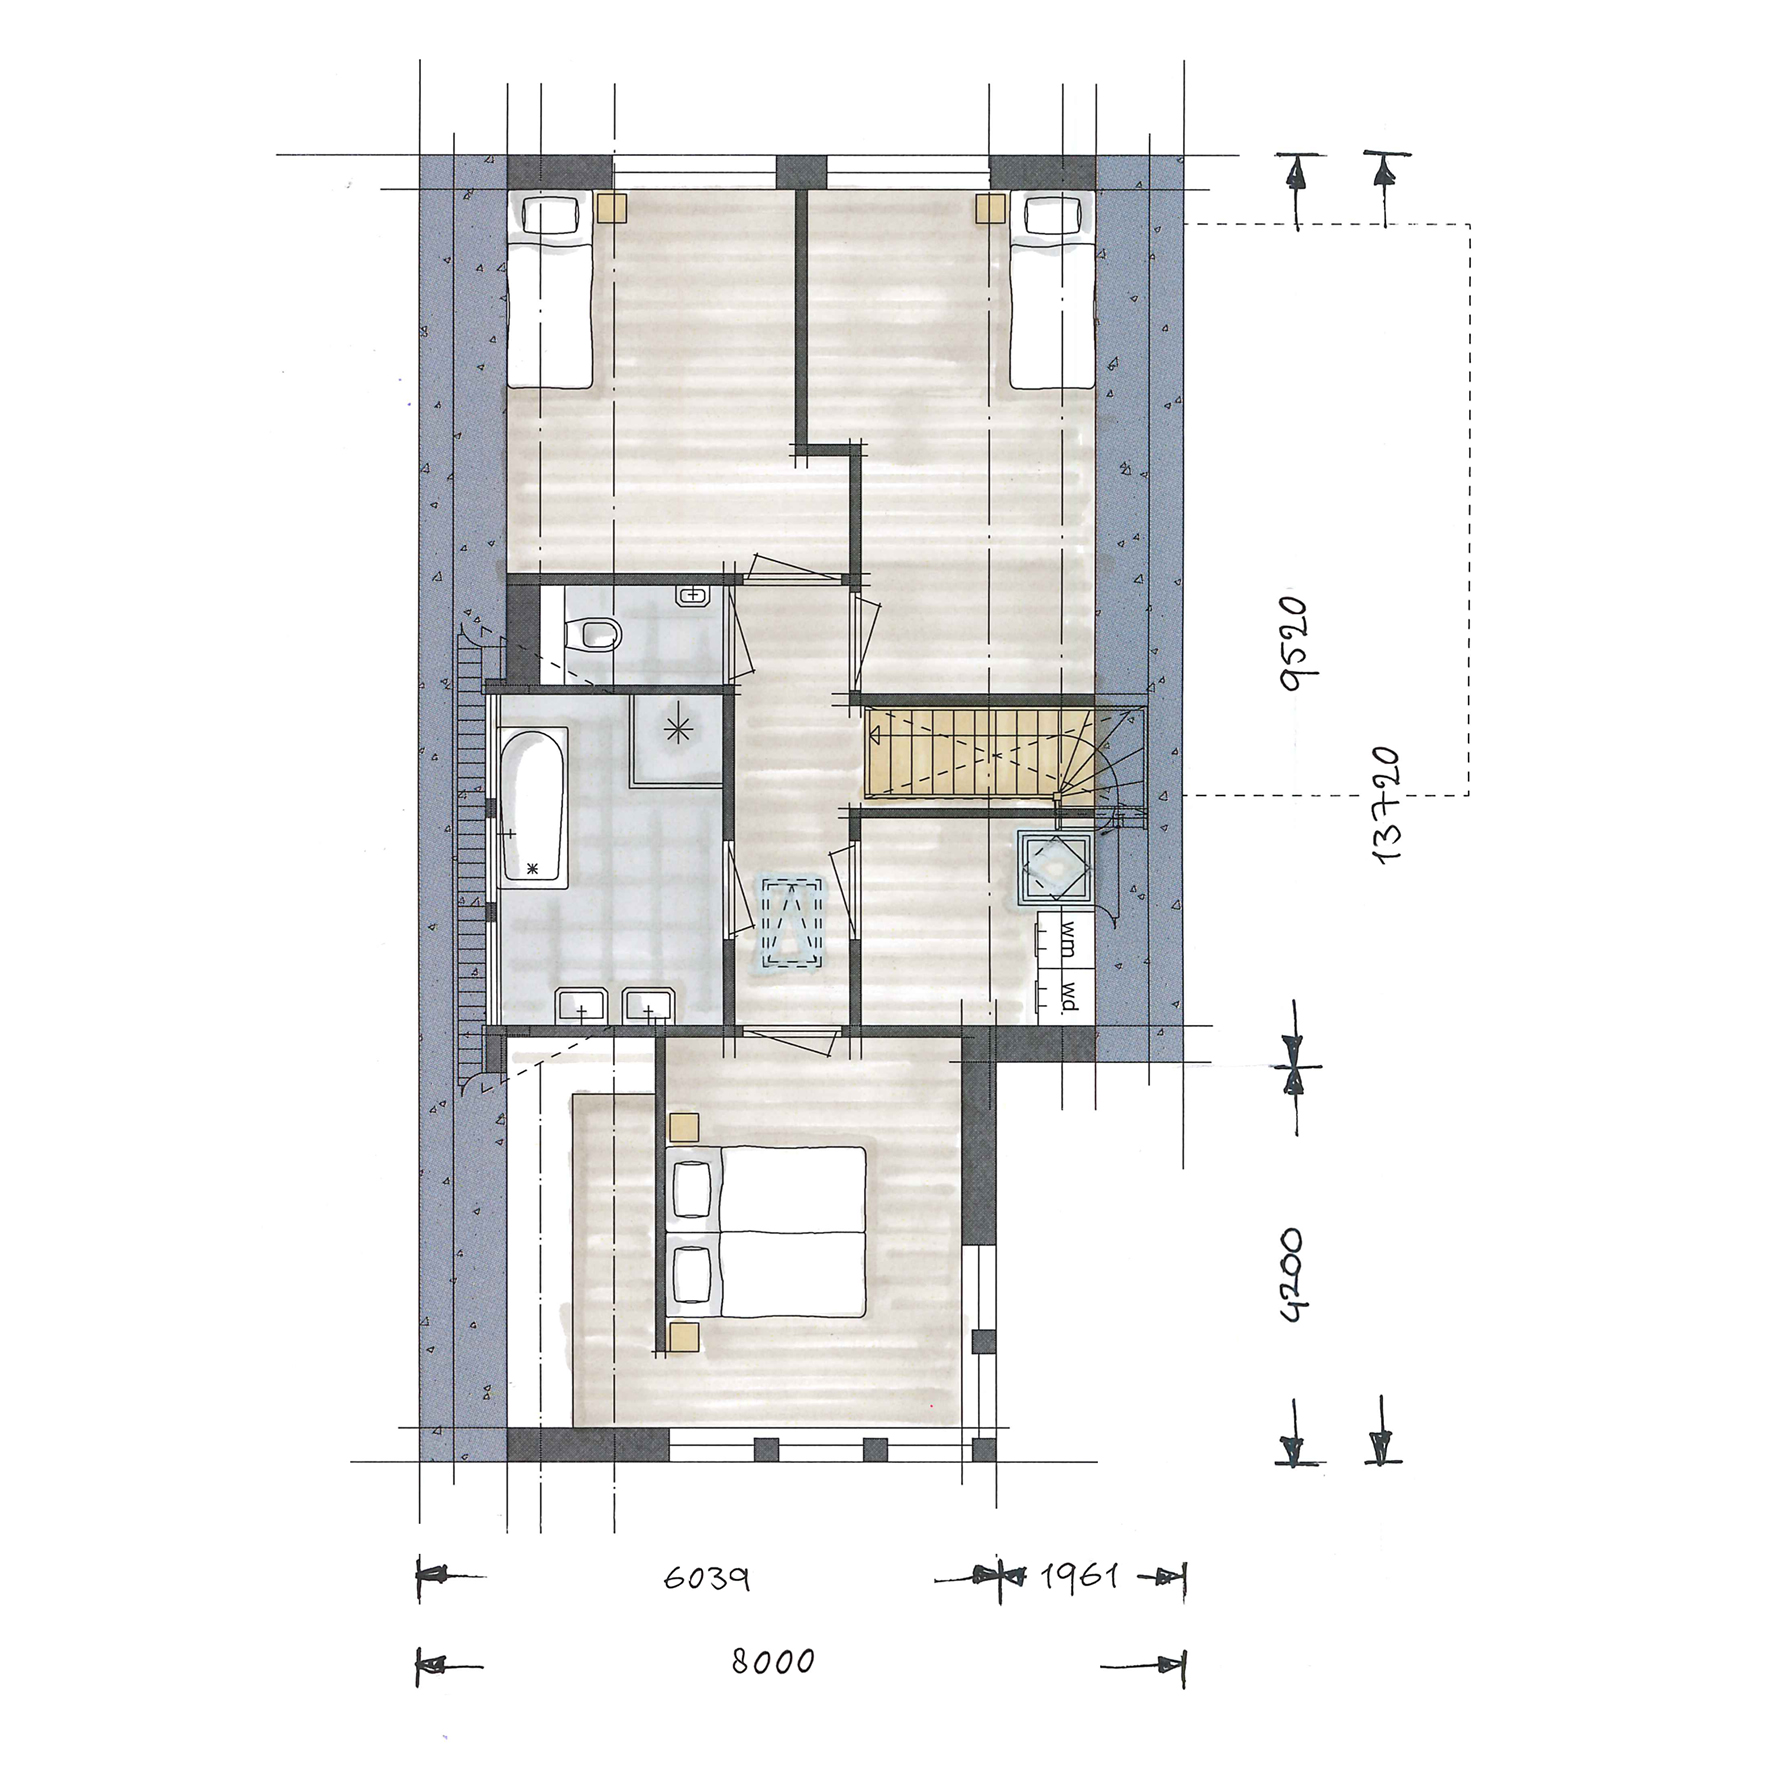 Foto: Huis bouwen  ndash  villatype Aurelia  Plus  plattegrond verdieping   Architectuurwonen